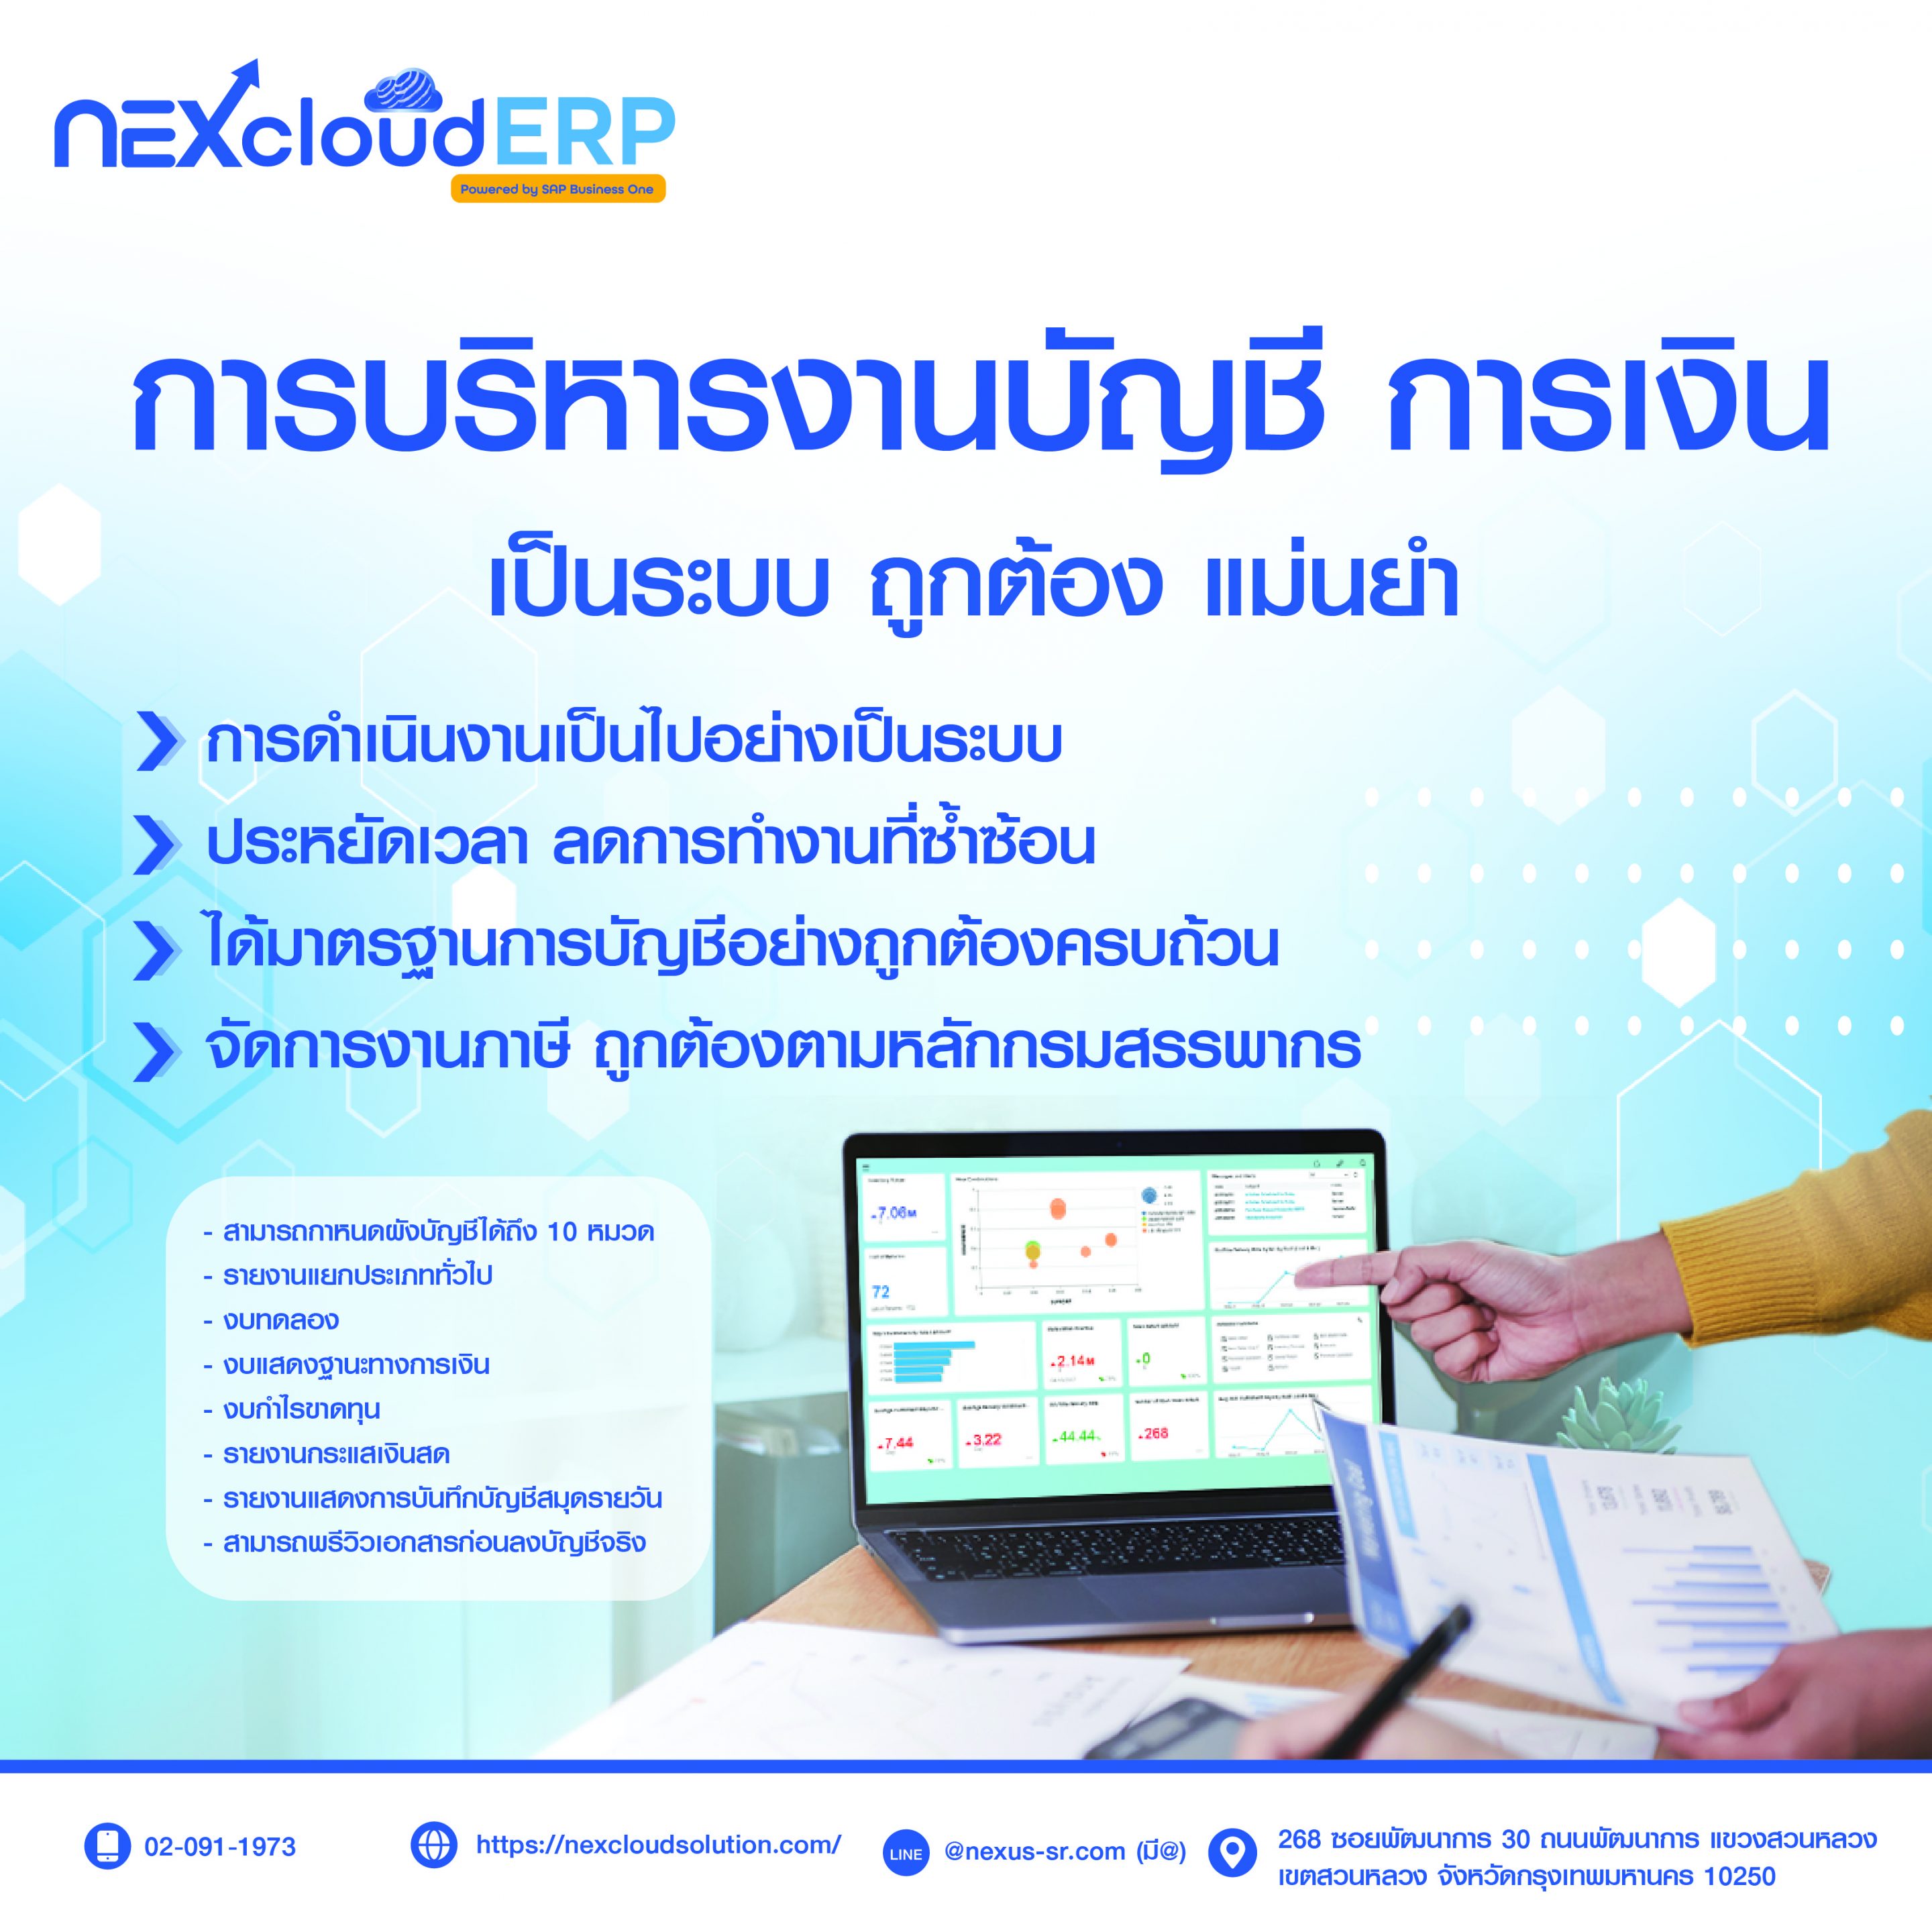 NEXcloud ERP เข้าใจระบบบัญชีและจัดการเอกสารทางบัญชีได้ง่าย